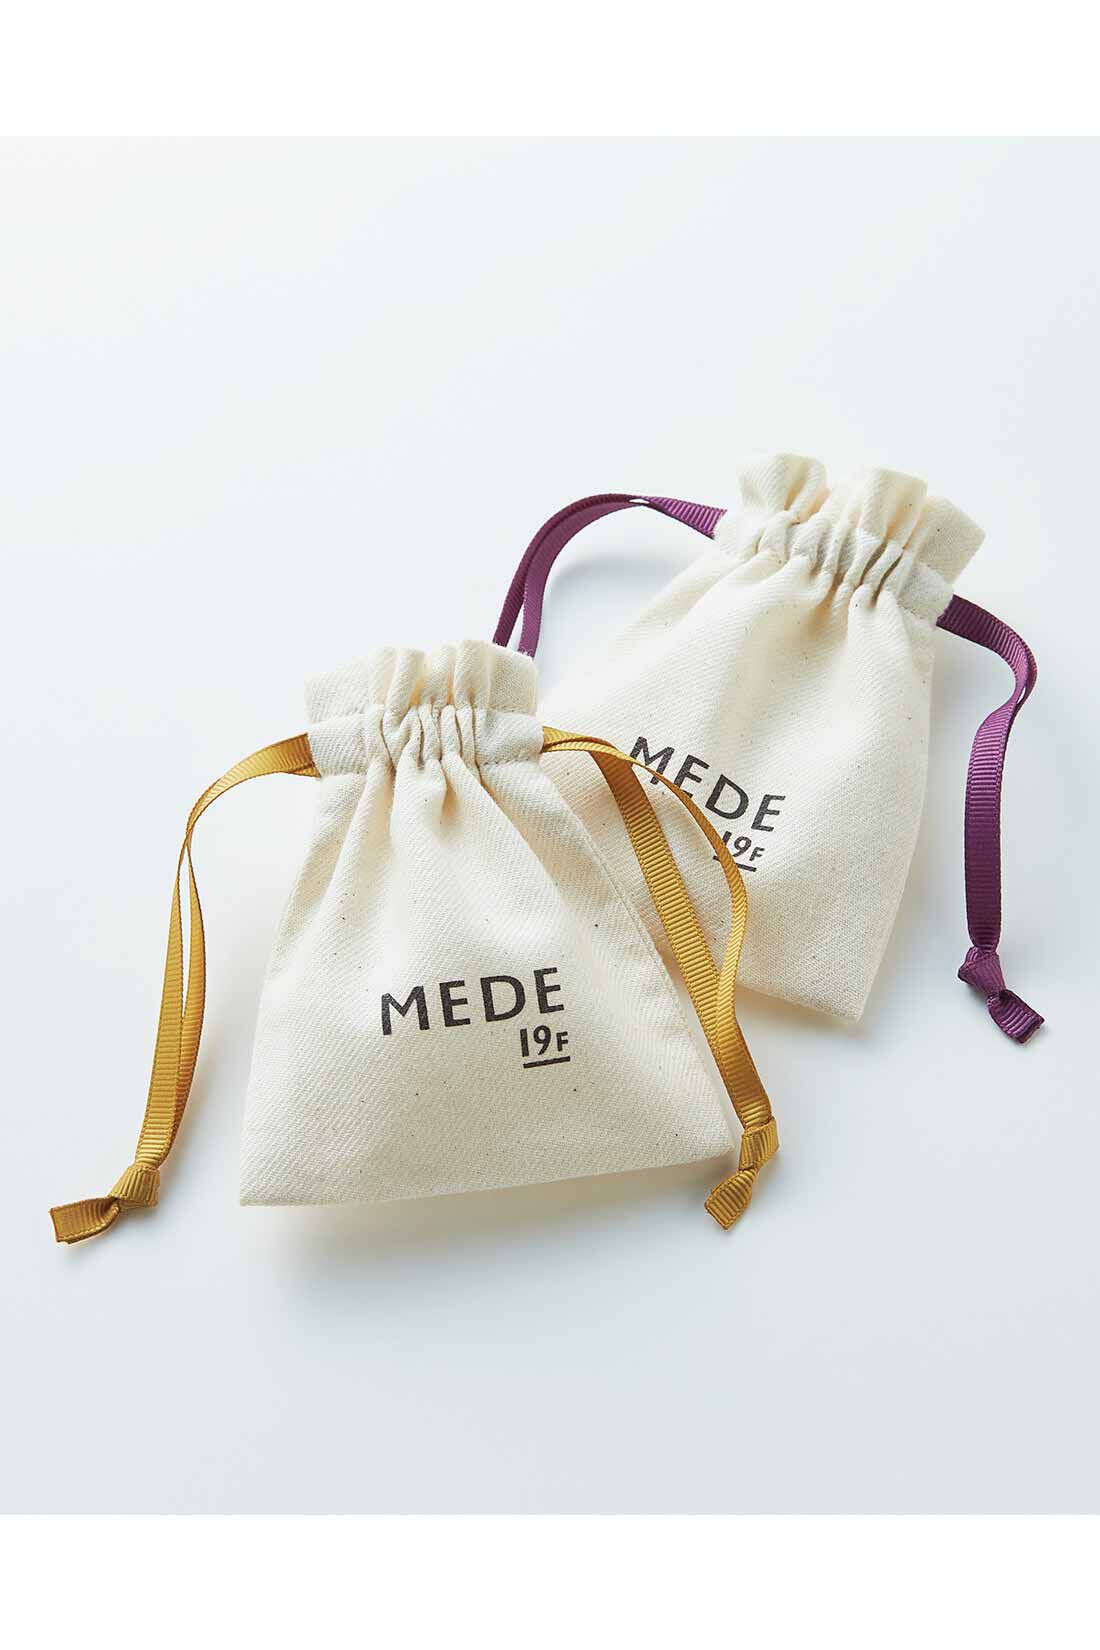 MEDE19F|YPAC for MEDE19F　フランス製陶器ボタンイヤリング type.23|MEDE19Fオリジナルきんちゃくに入れてお届けします。